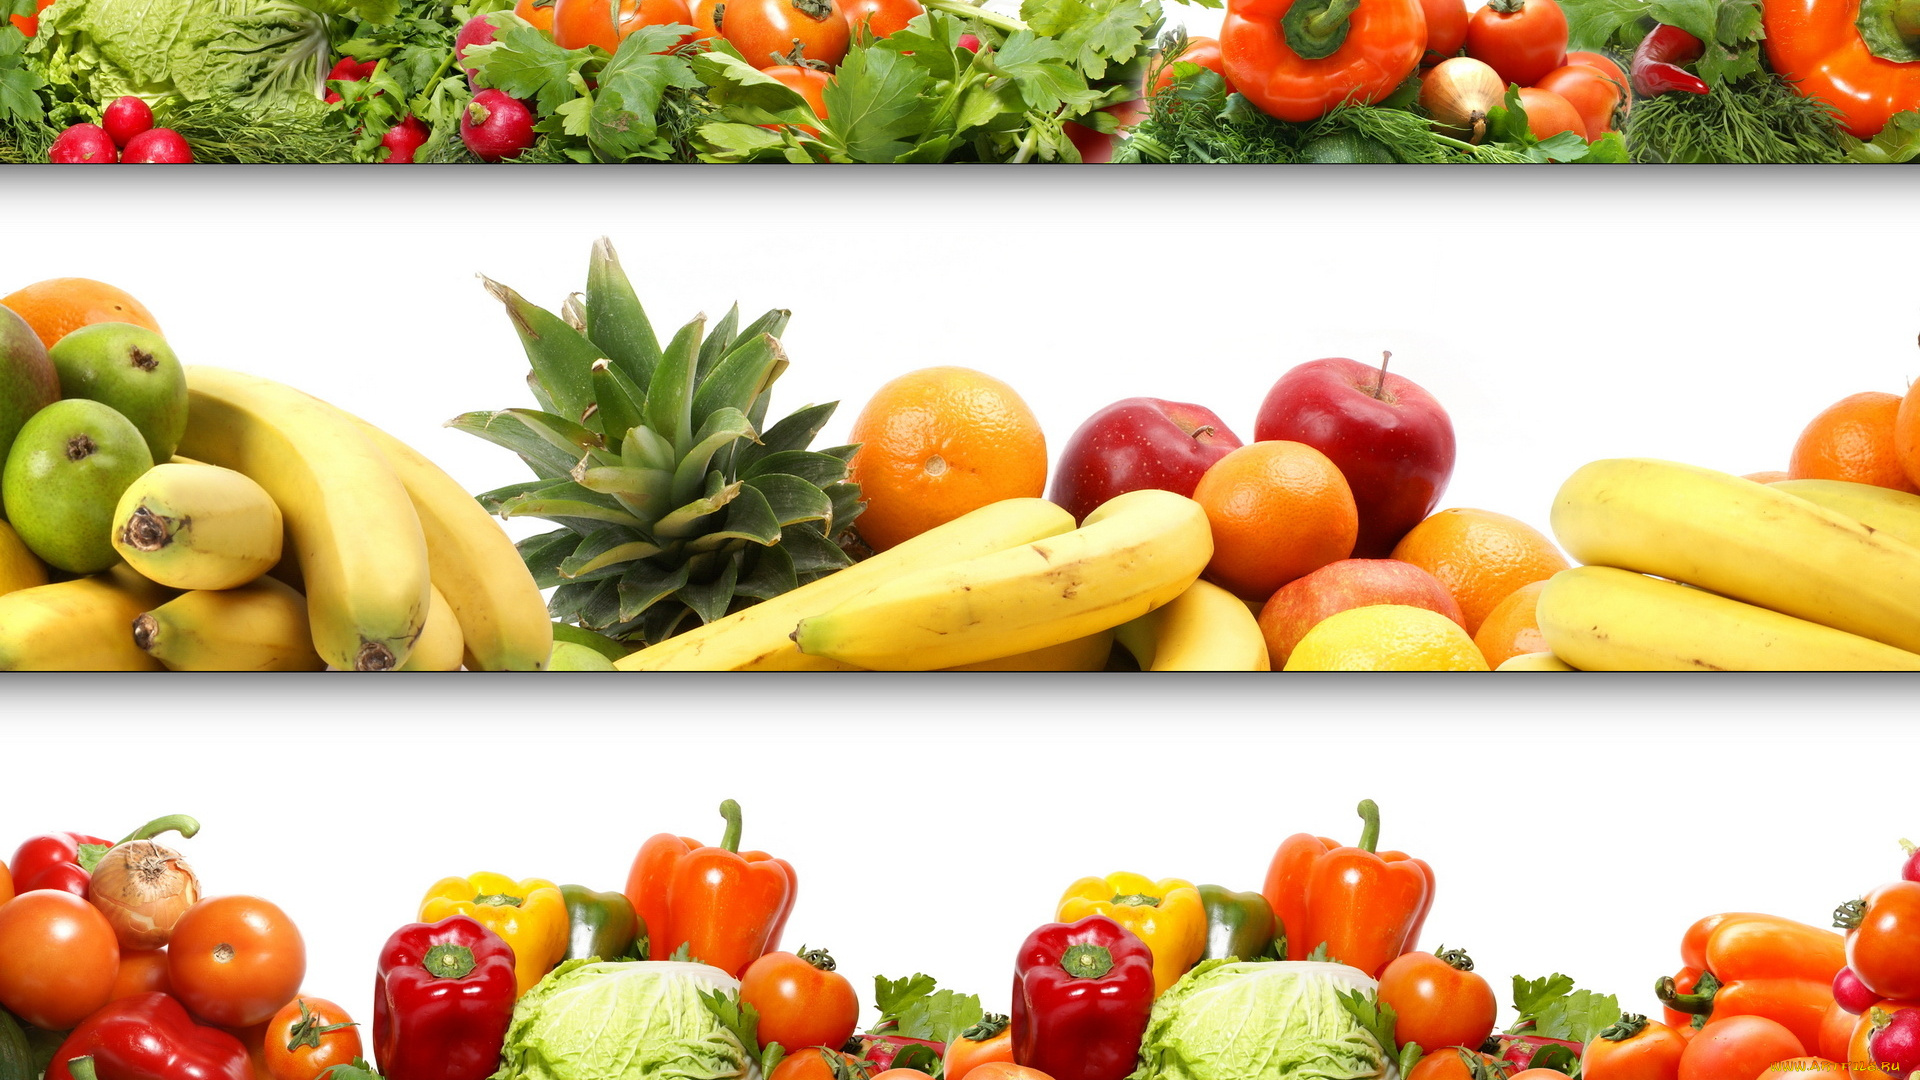 еда, фрукты, овощи, вместе, помидоры, перец, бананы, яблоки, зелень, томаты